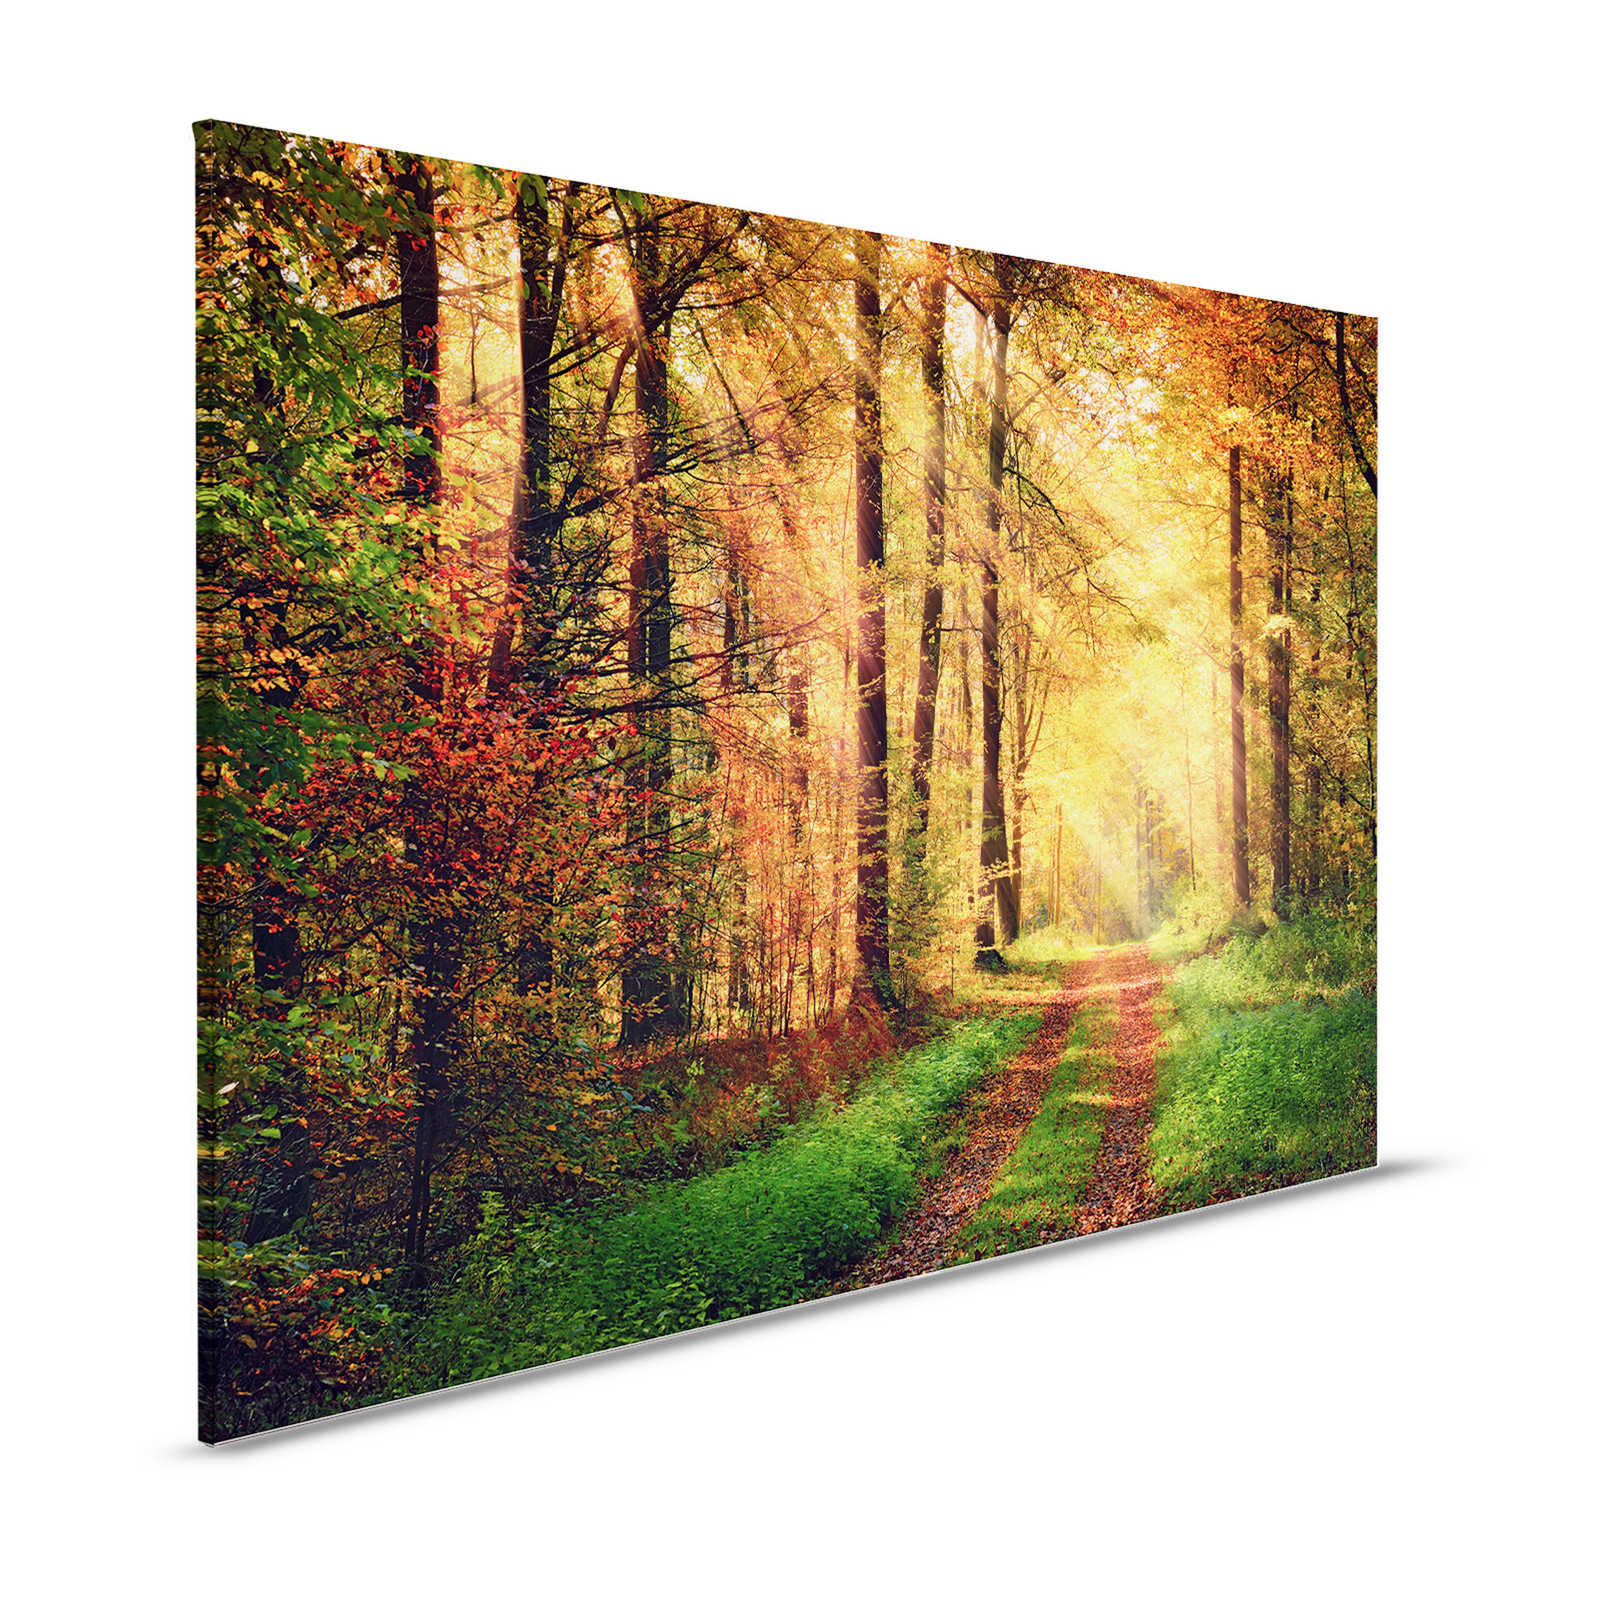 Autumn Morning Canvas Painting Deciduous Forest - 1.20 m x 0.80 m
